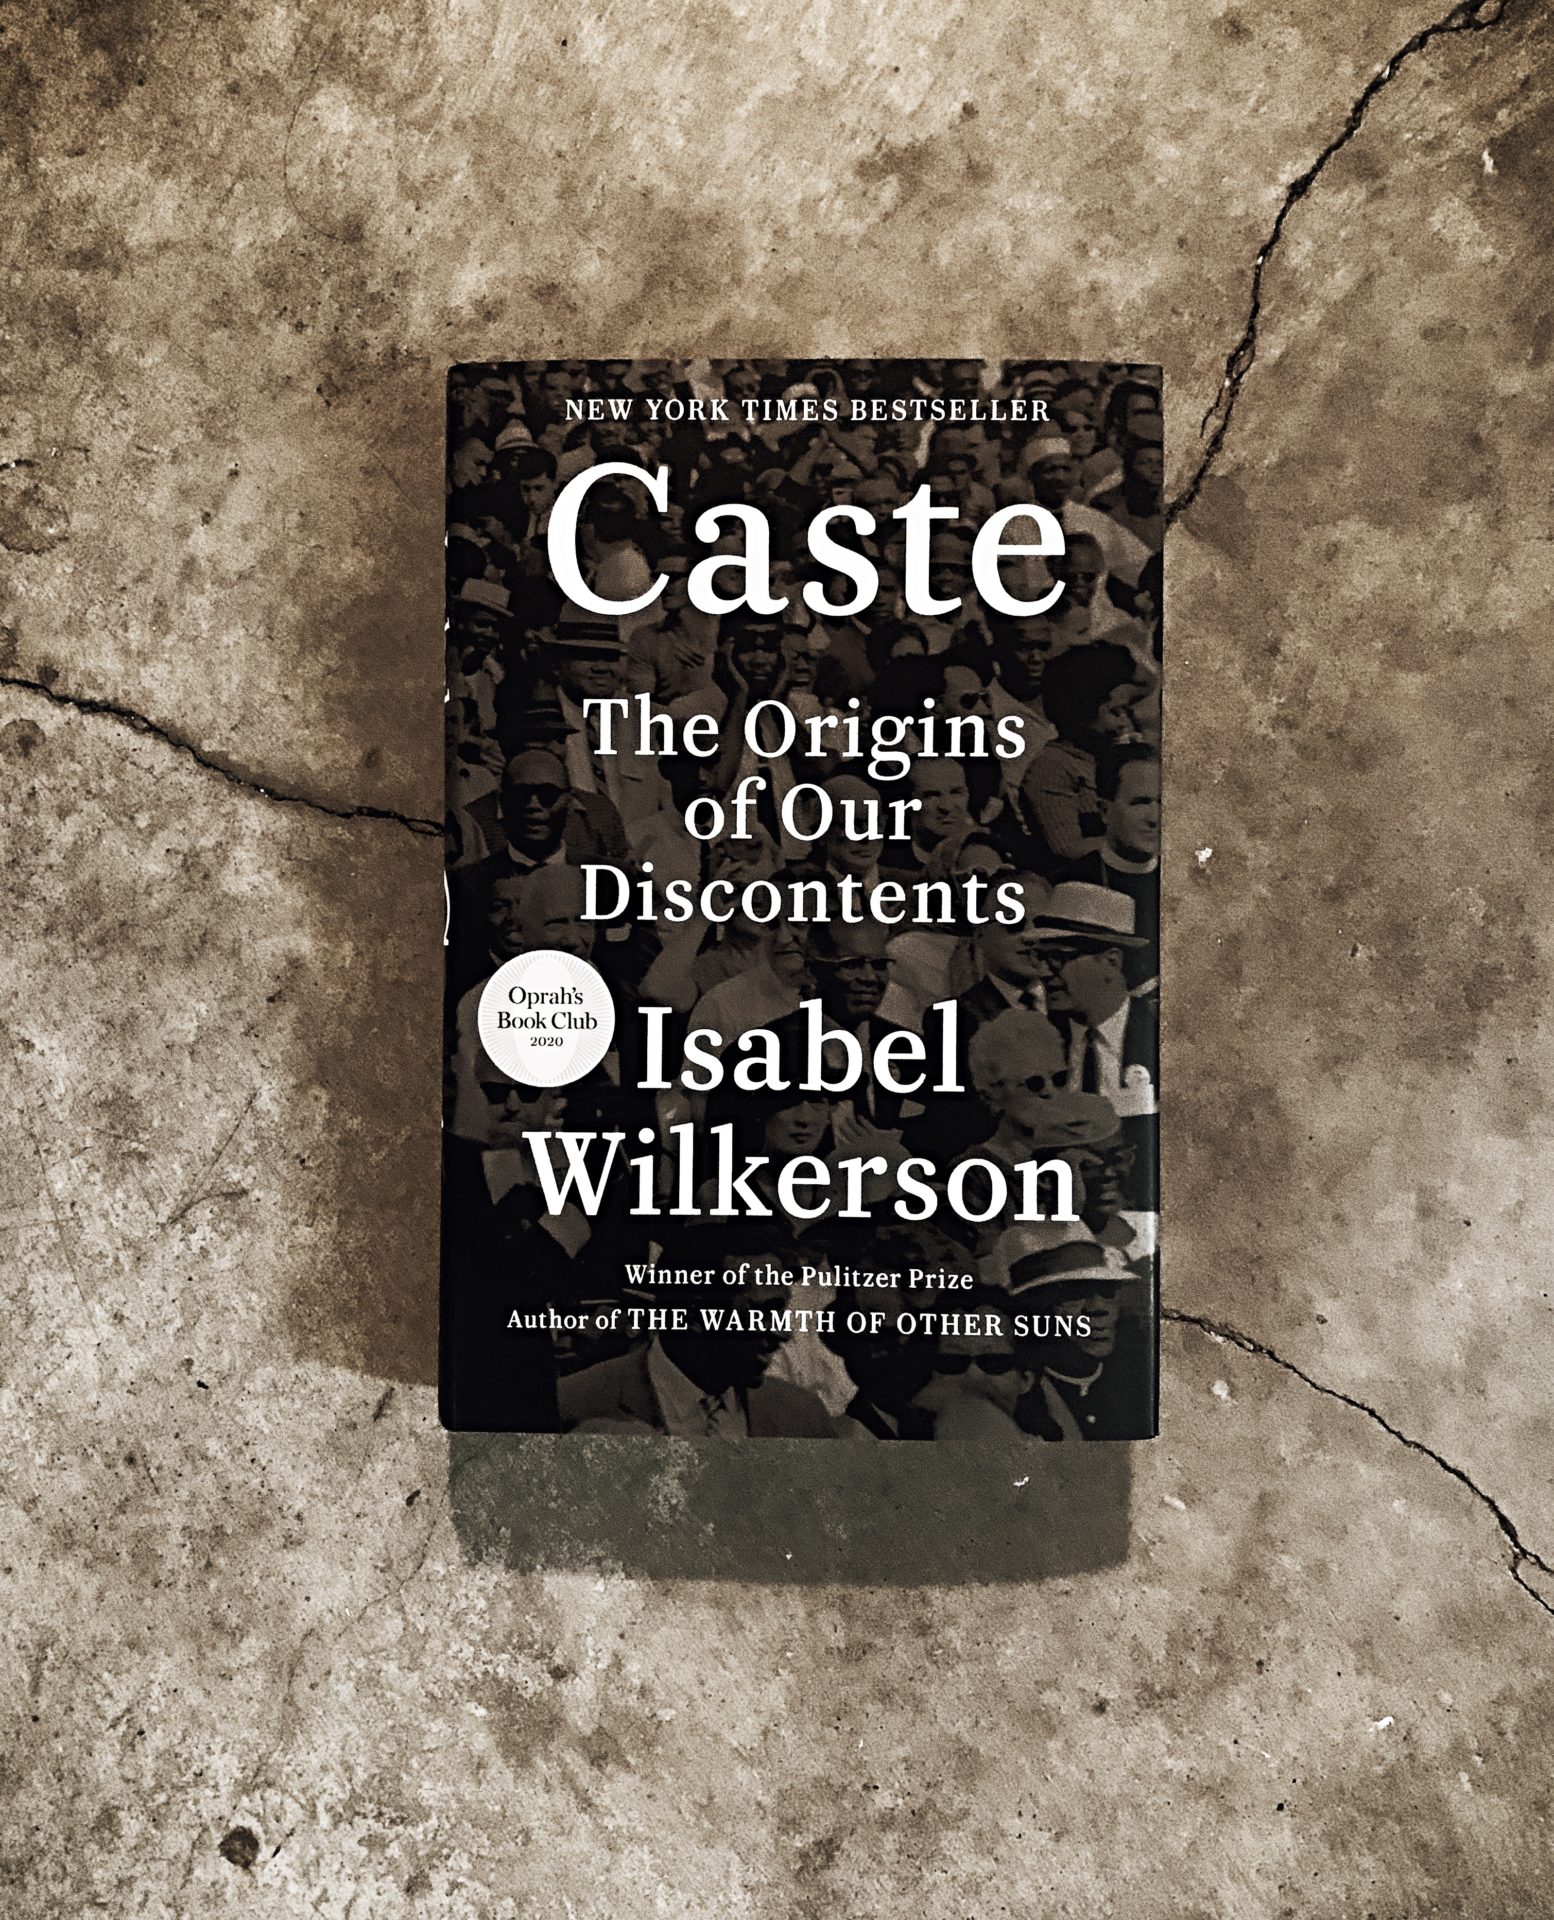 December Book Club: ‘Caste’ by Isabel Wilkerson